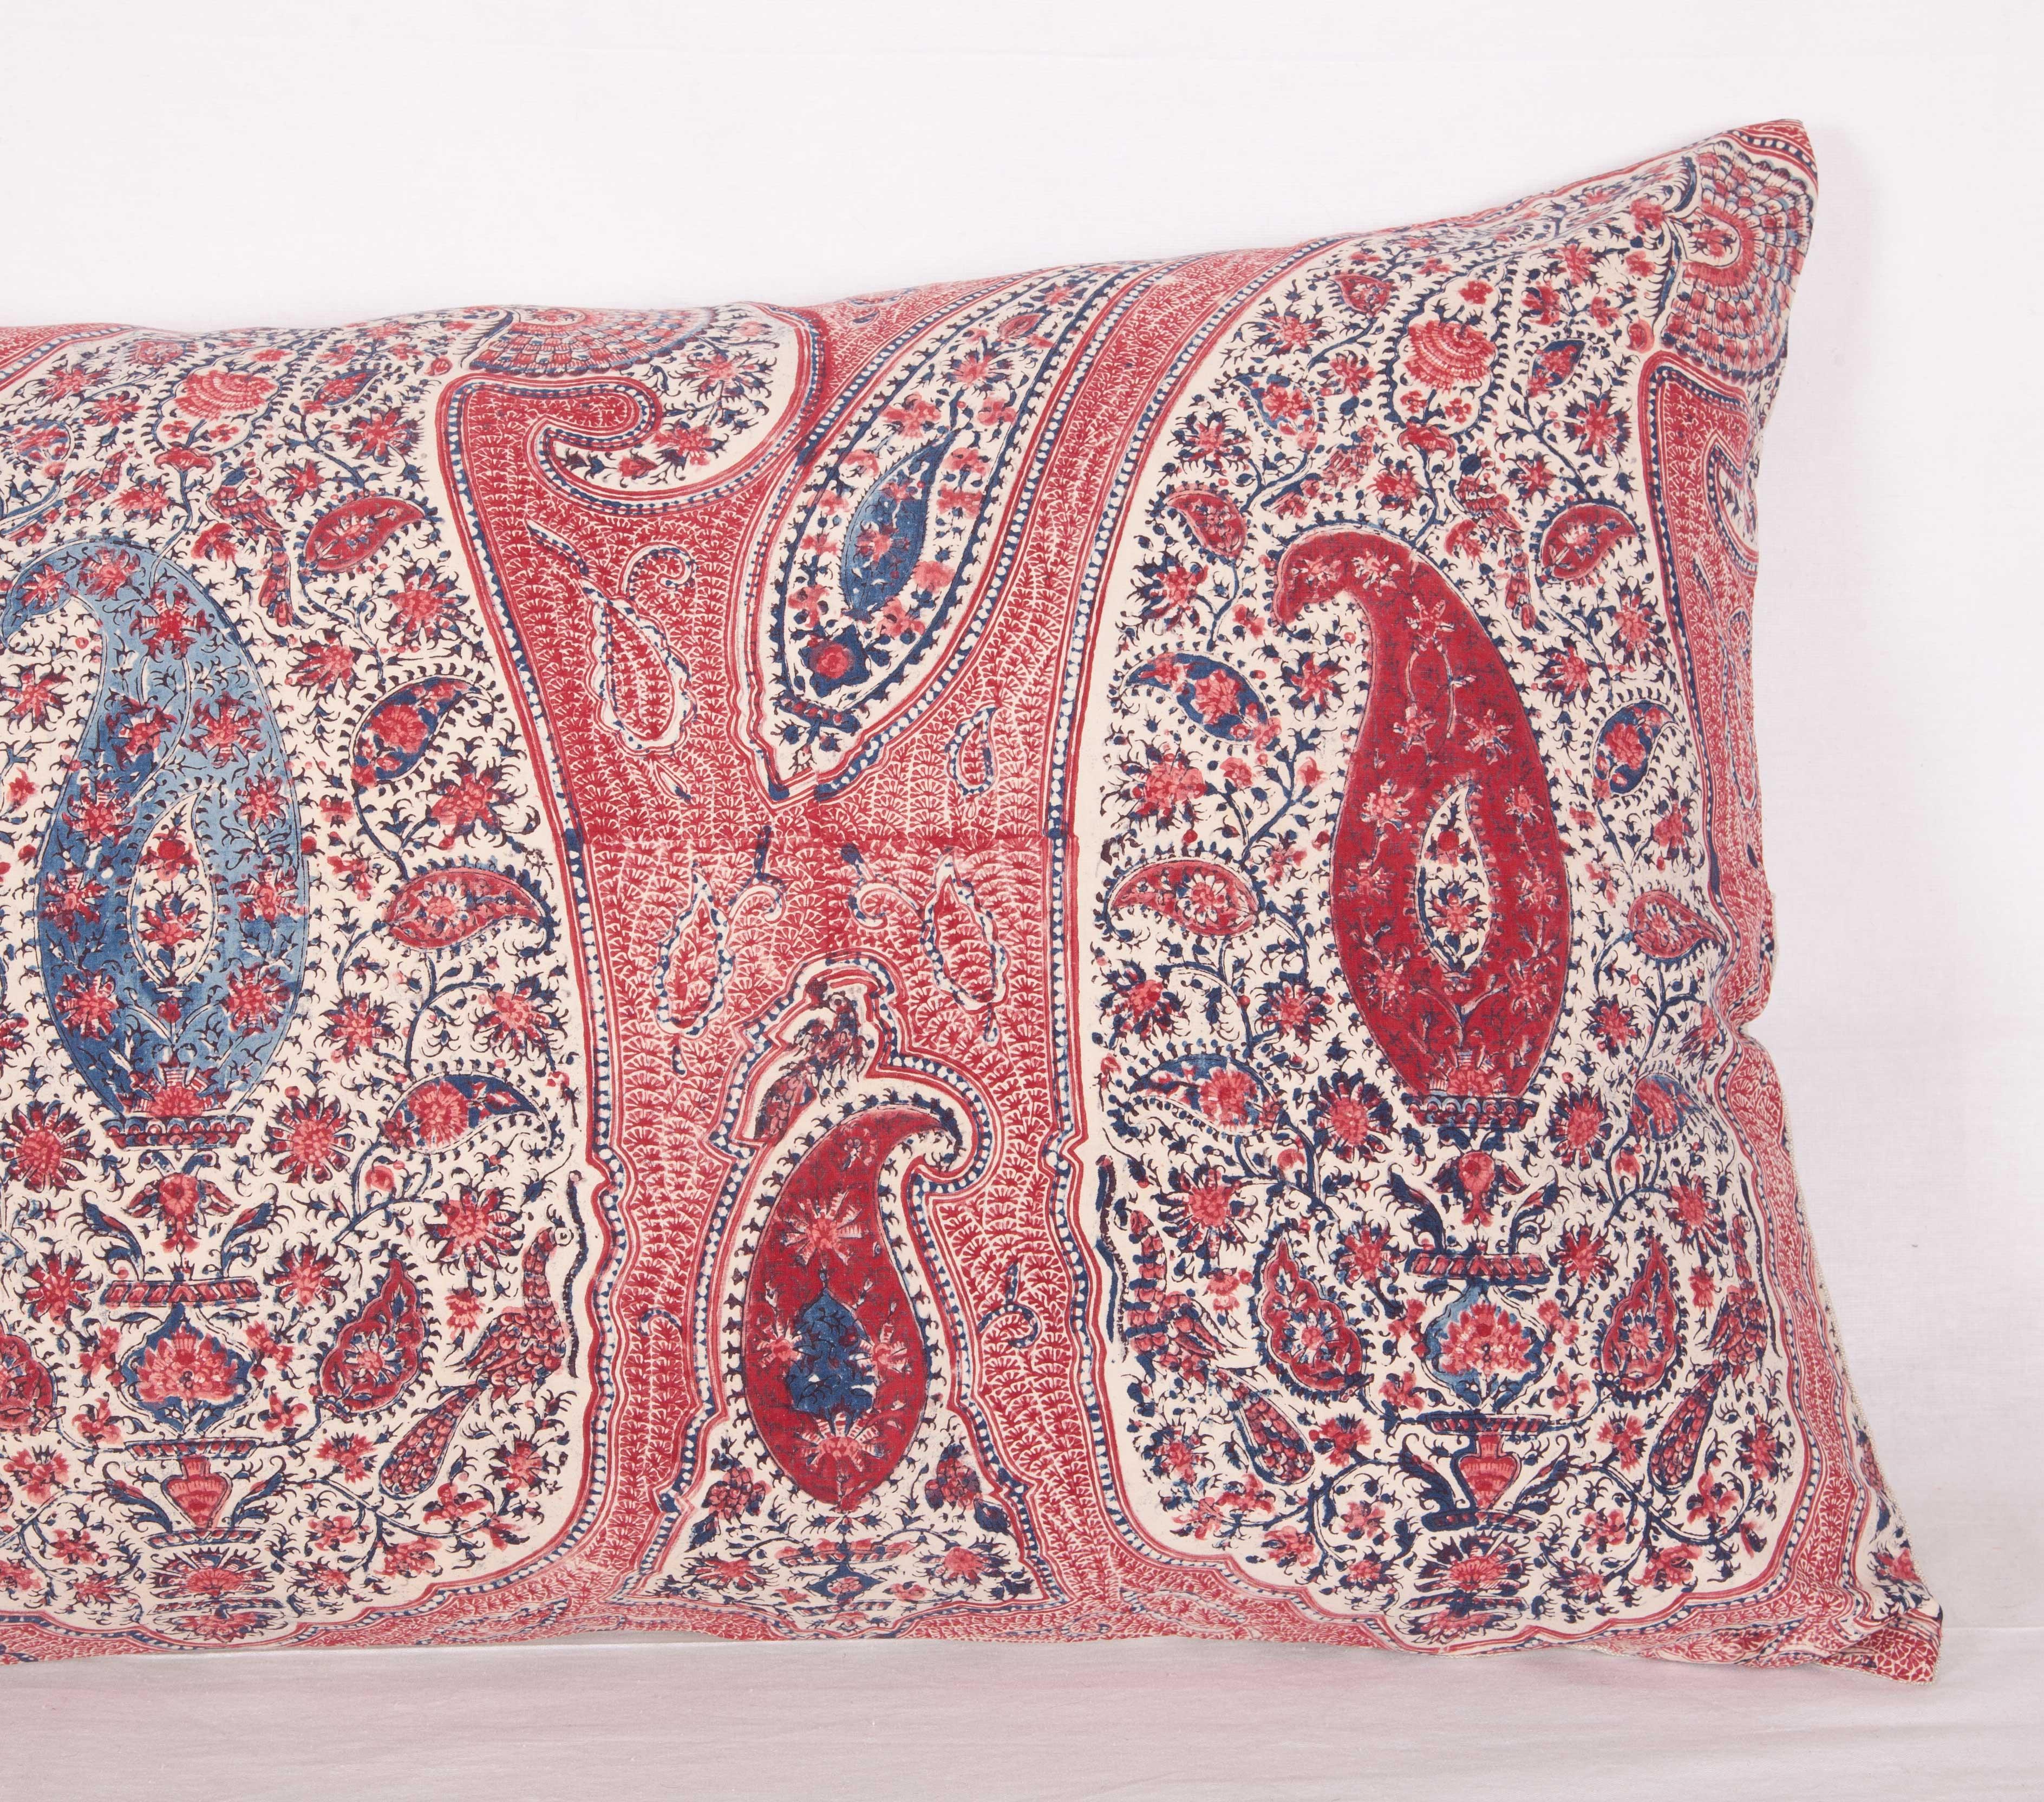 Kalamkari Lumbar Pillow Case Fashioned from an Antique Indian Qalamkar Panel, 19th Century